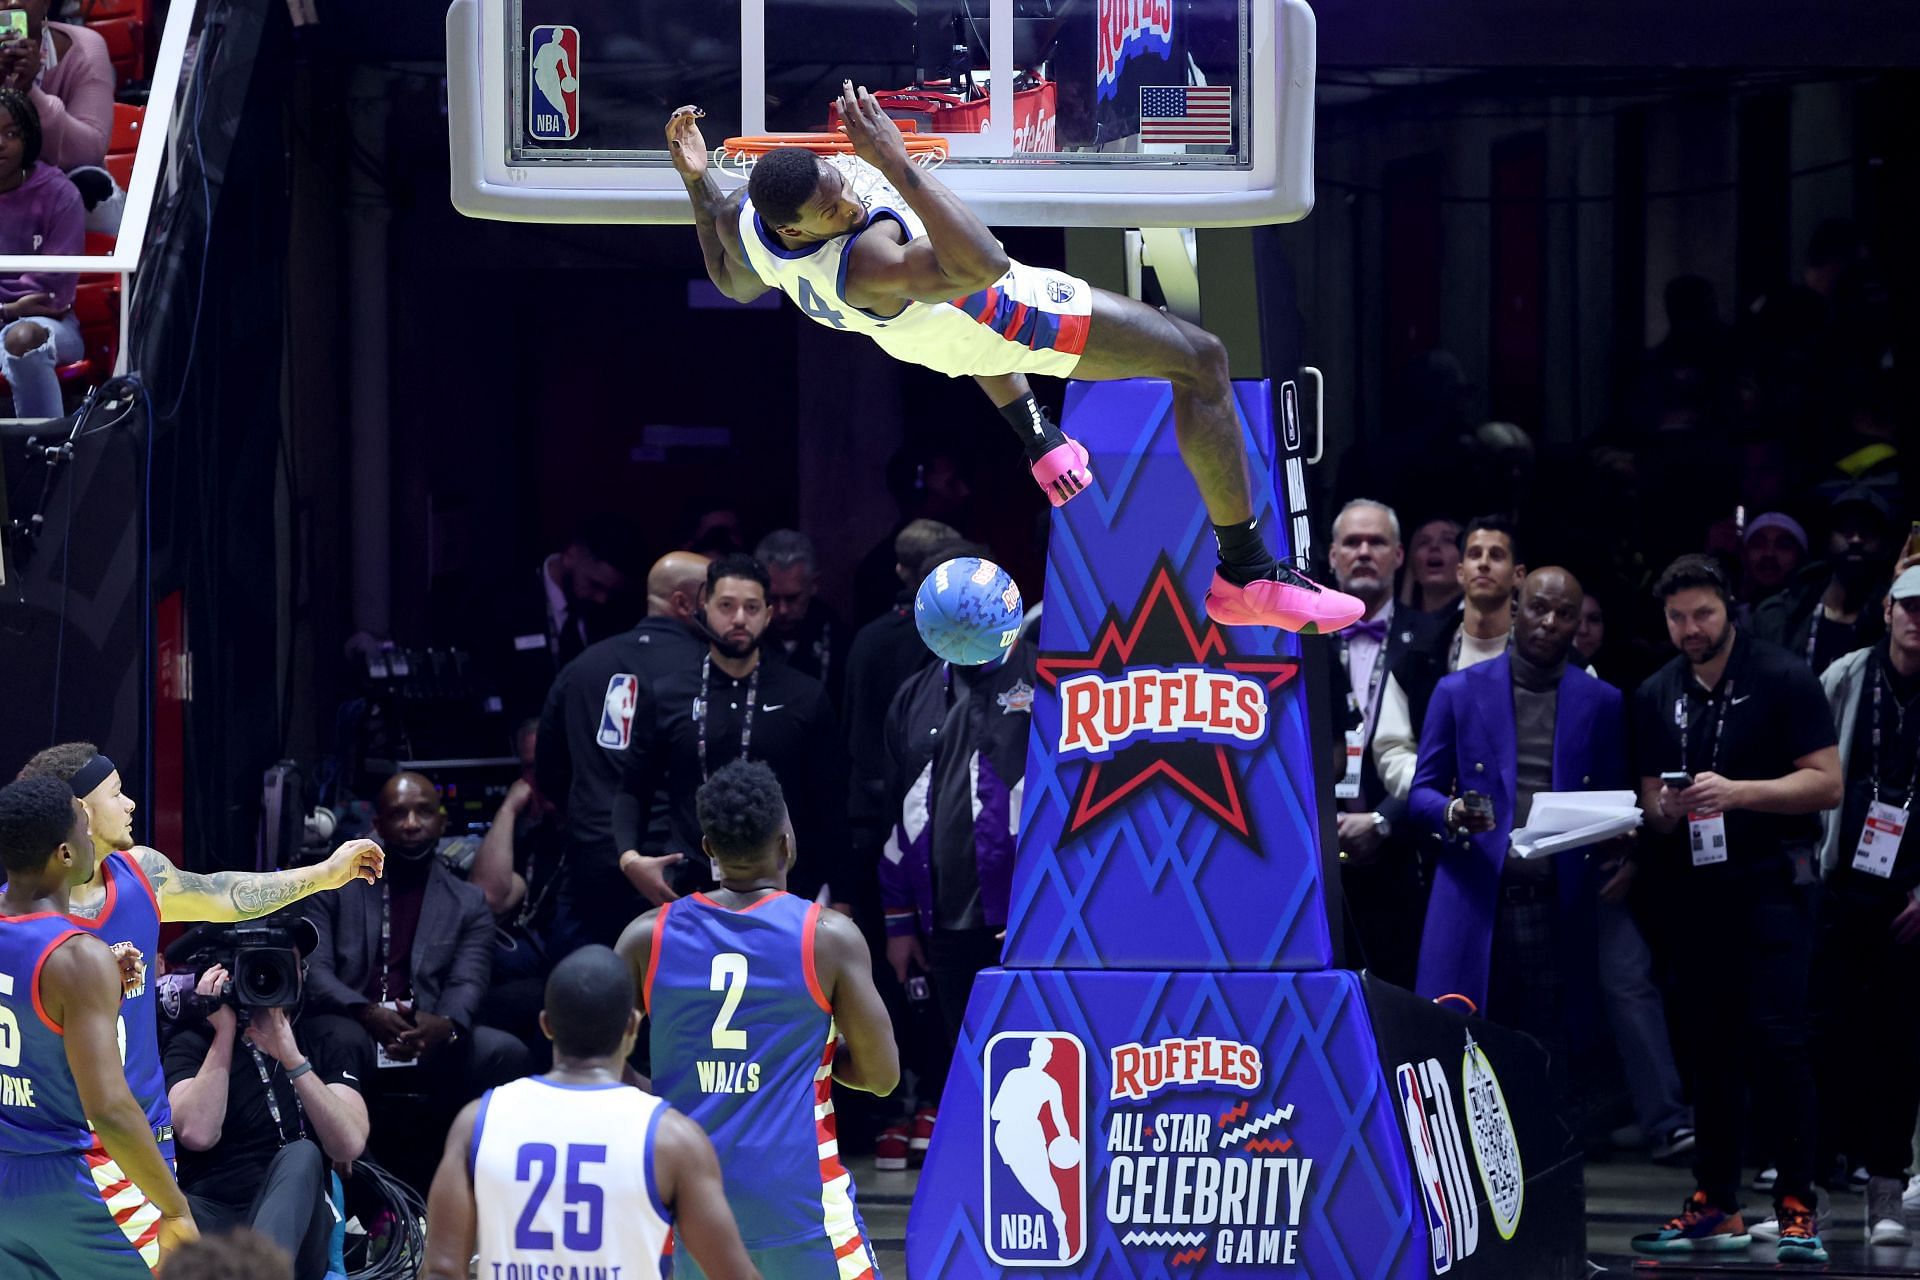 DK Metcalf dunks at the 2023 NBA All Star - Ruffles Celebrity Game